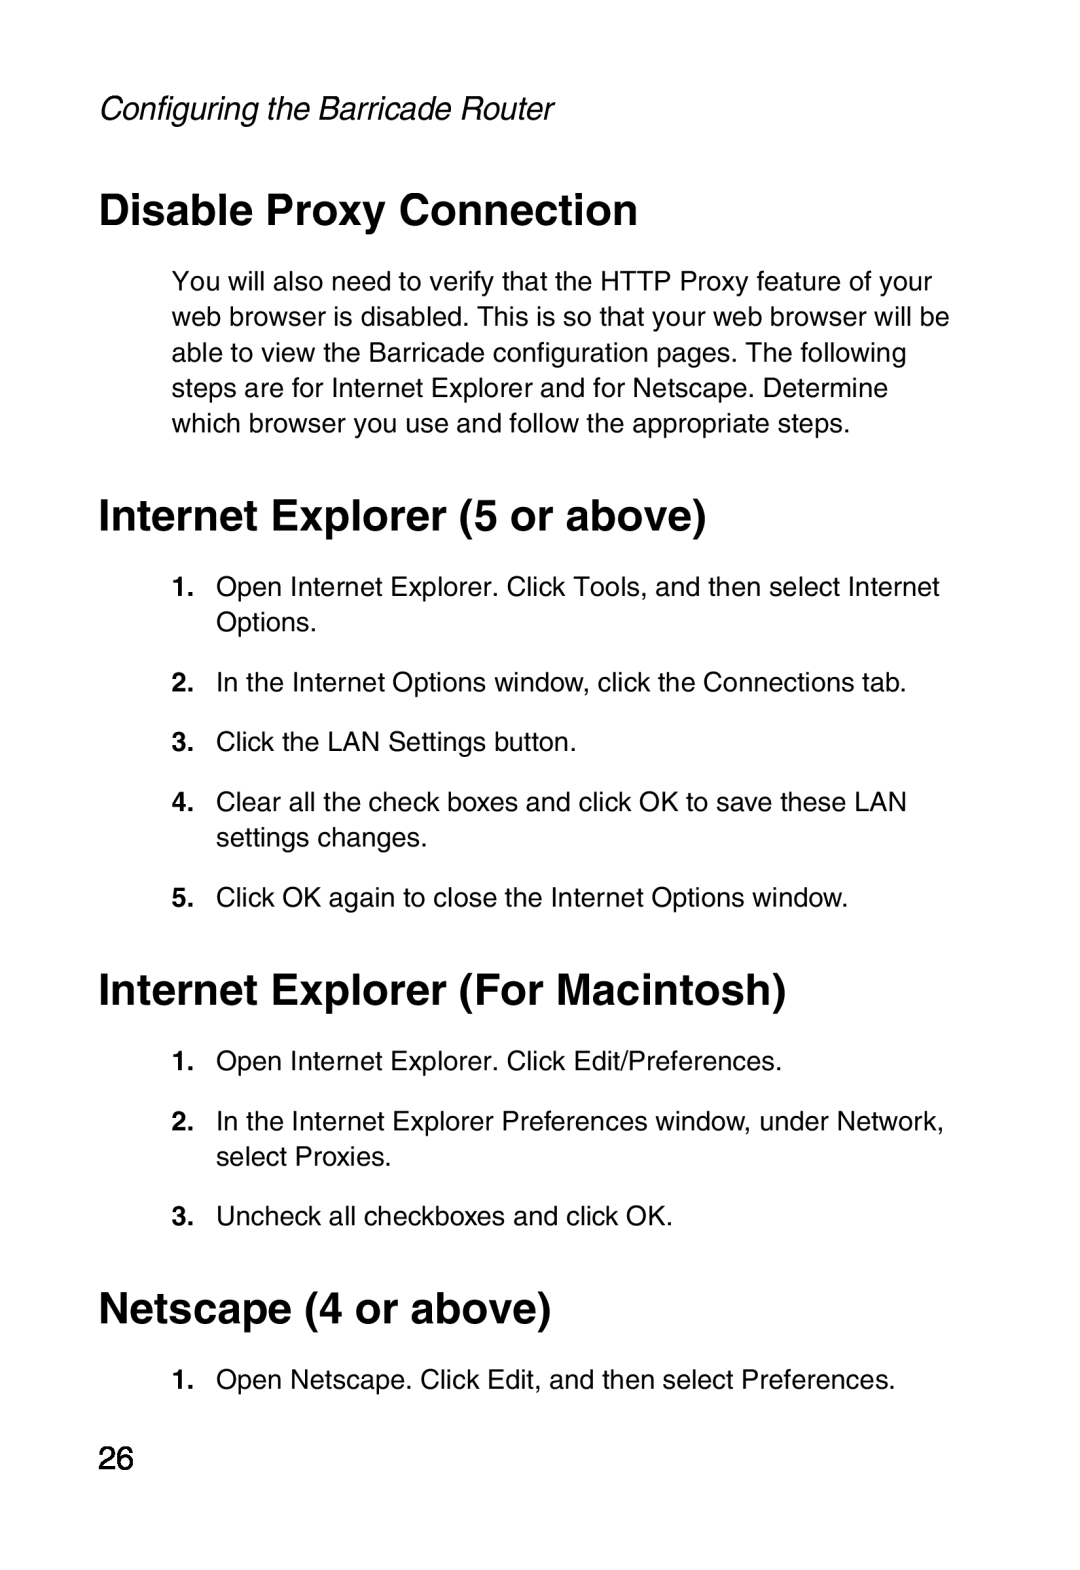 Sharp SMC7004ABR manual Disable Proxy Connection, Internet Explorer 5 or above, Internet Explorer For Macintosh 